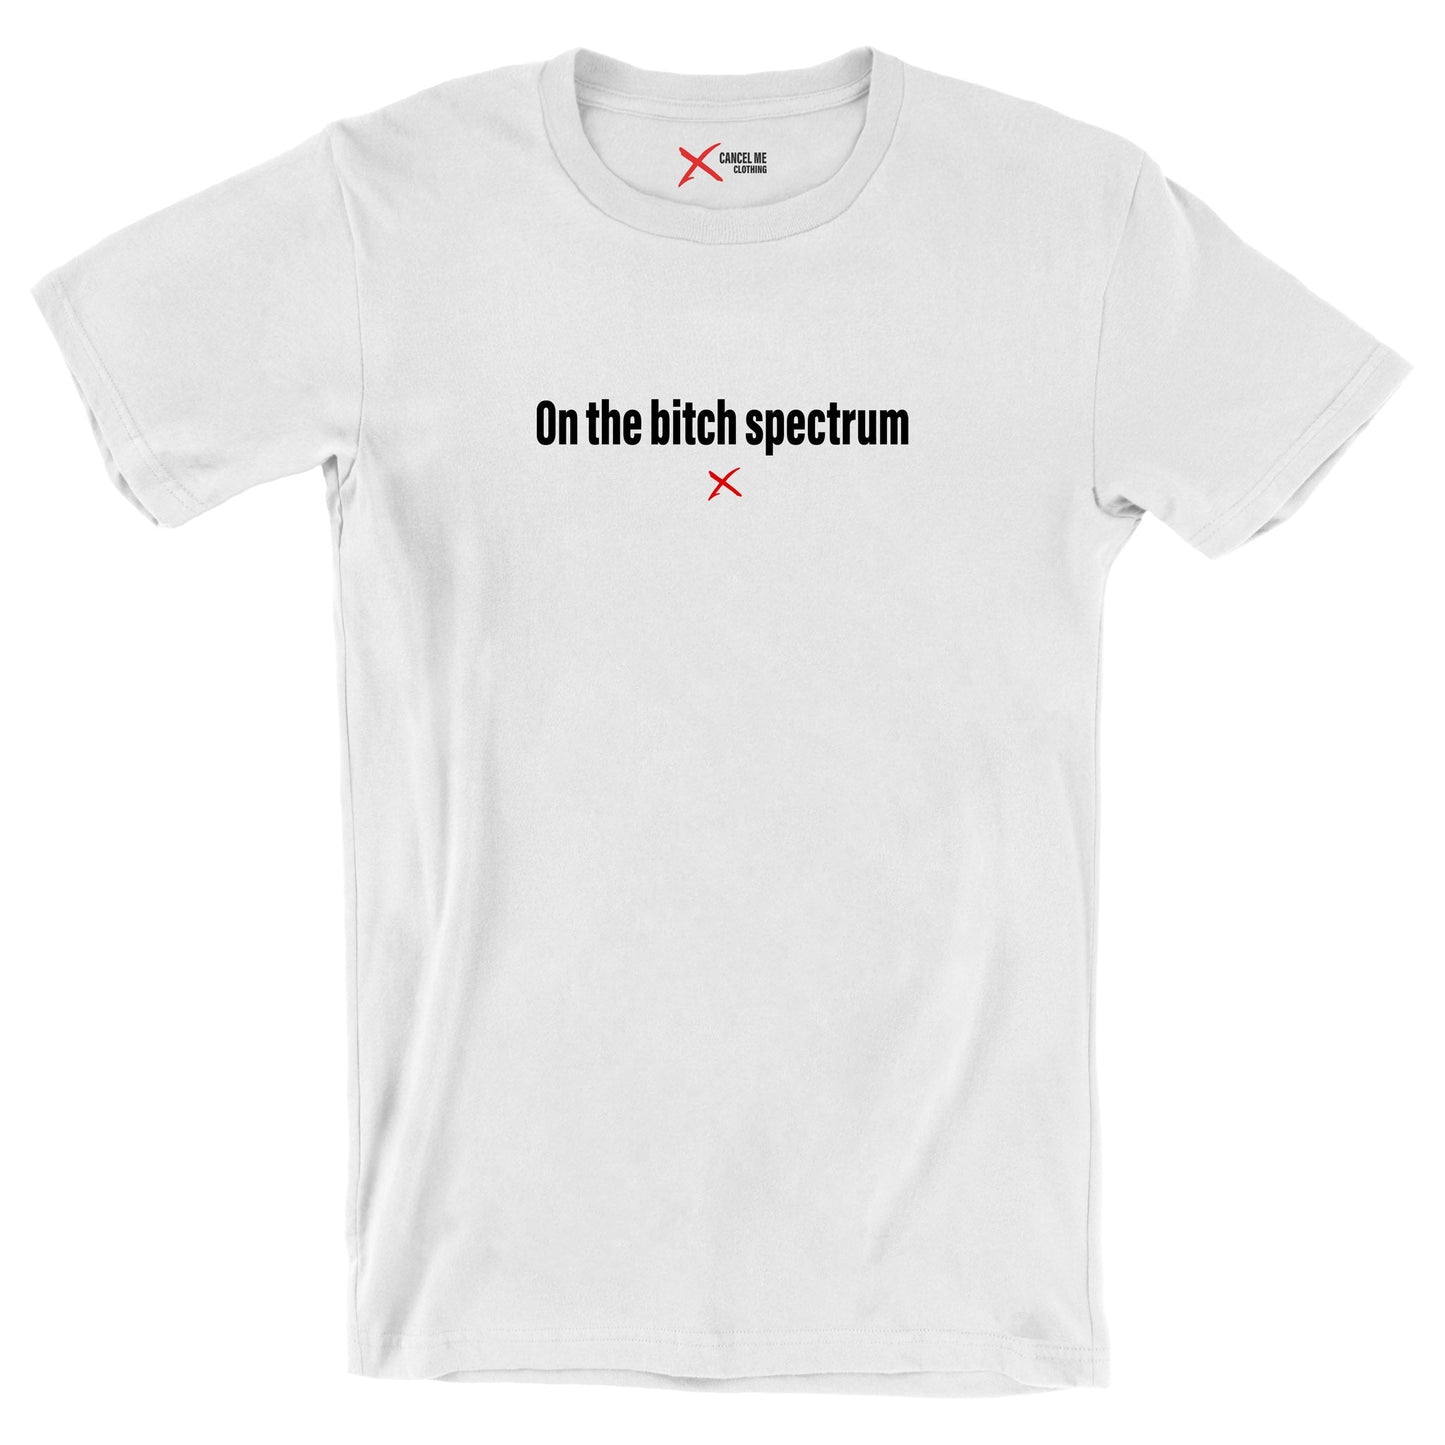 On the bitch spectrum - Shirt